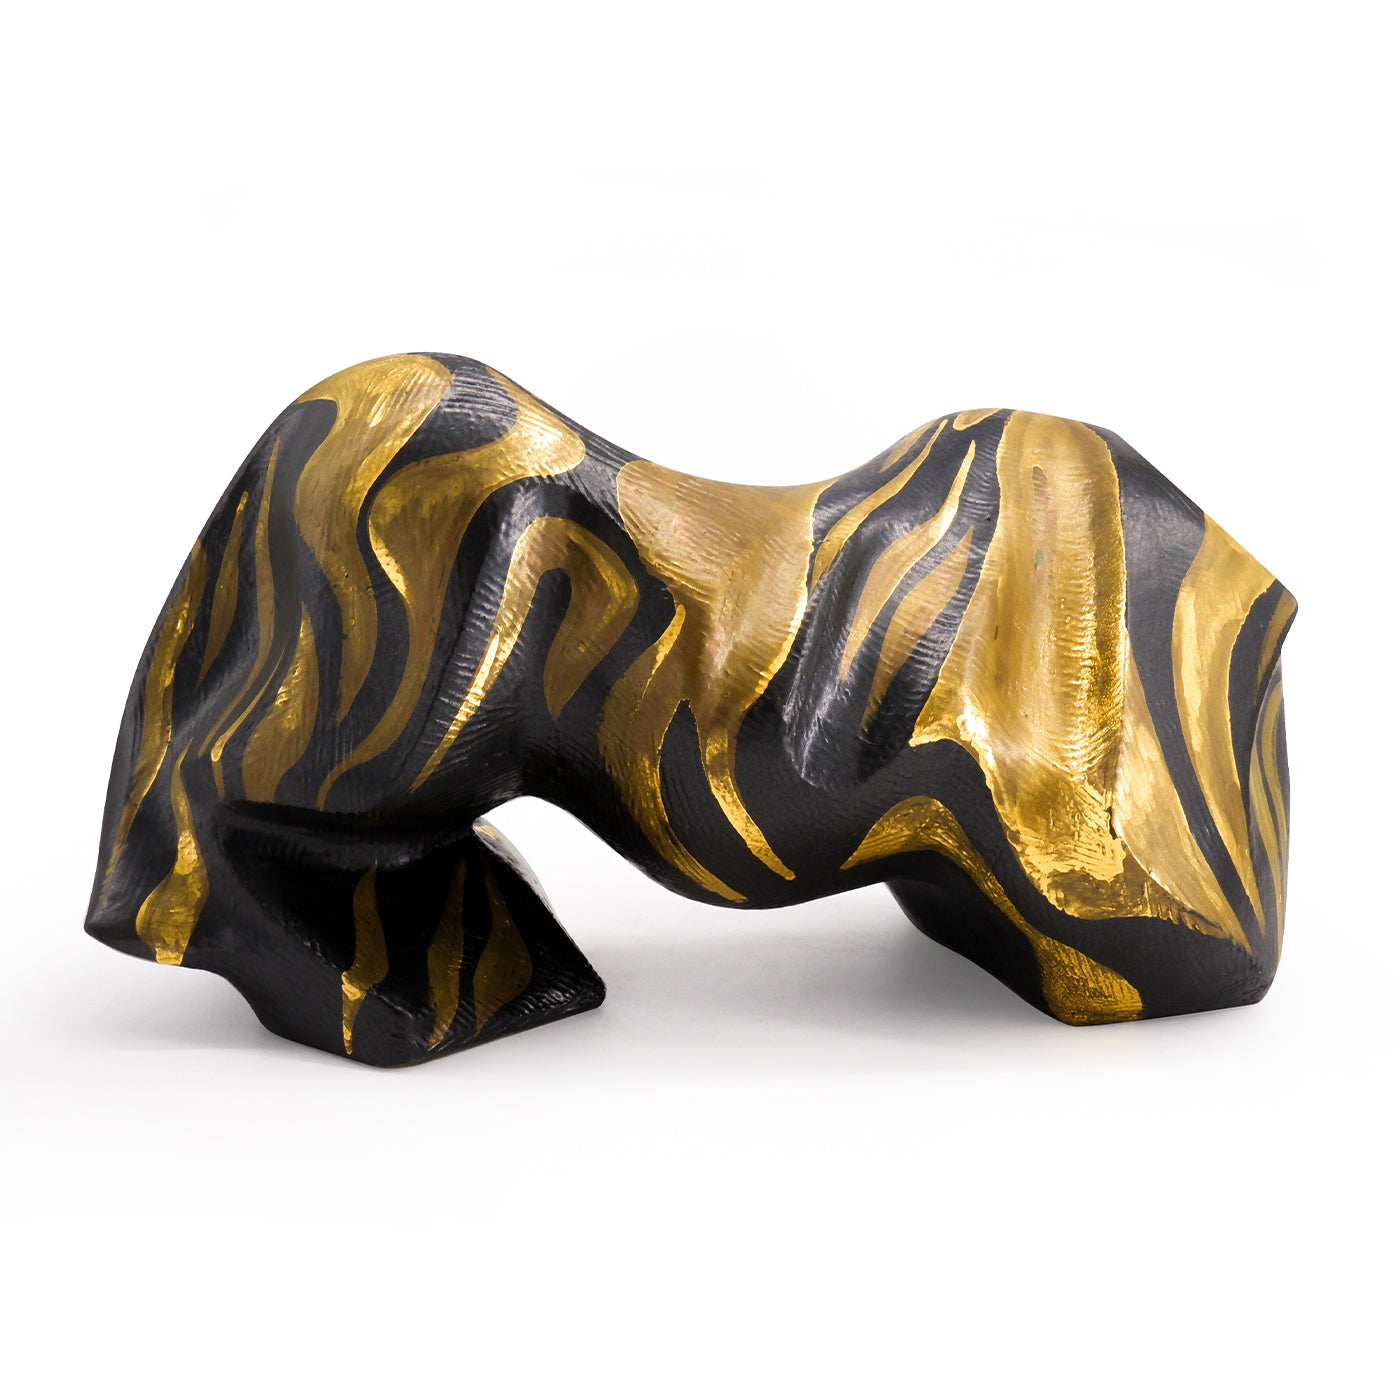 Escultura Tora negra y dorada - Vista alternativa 1